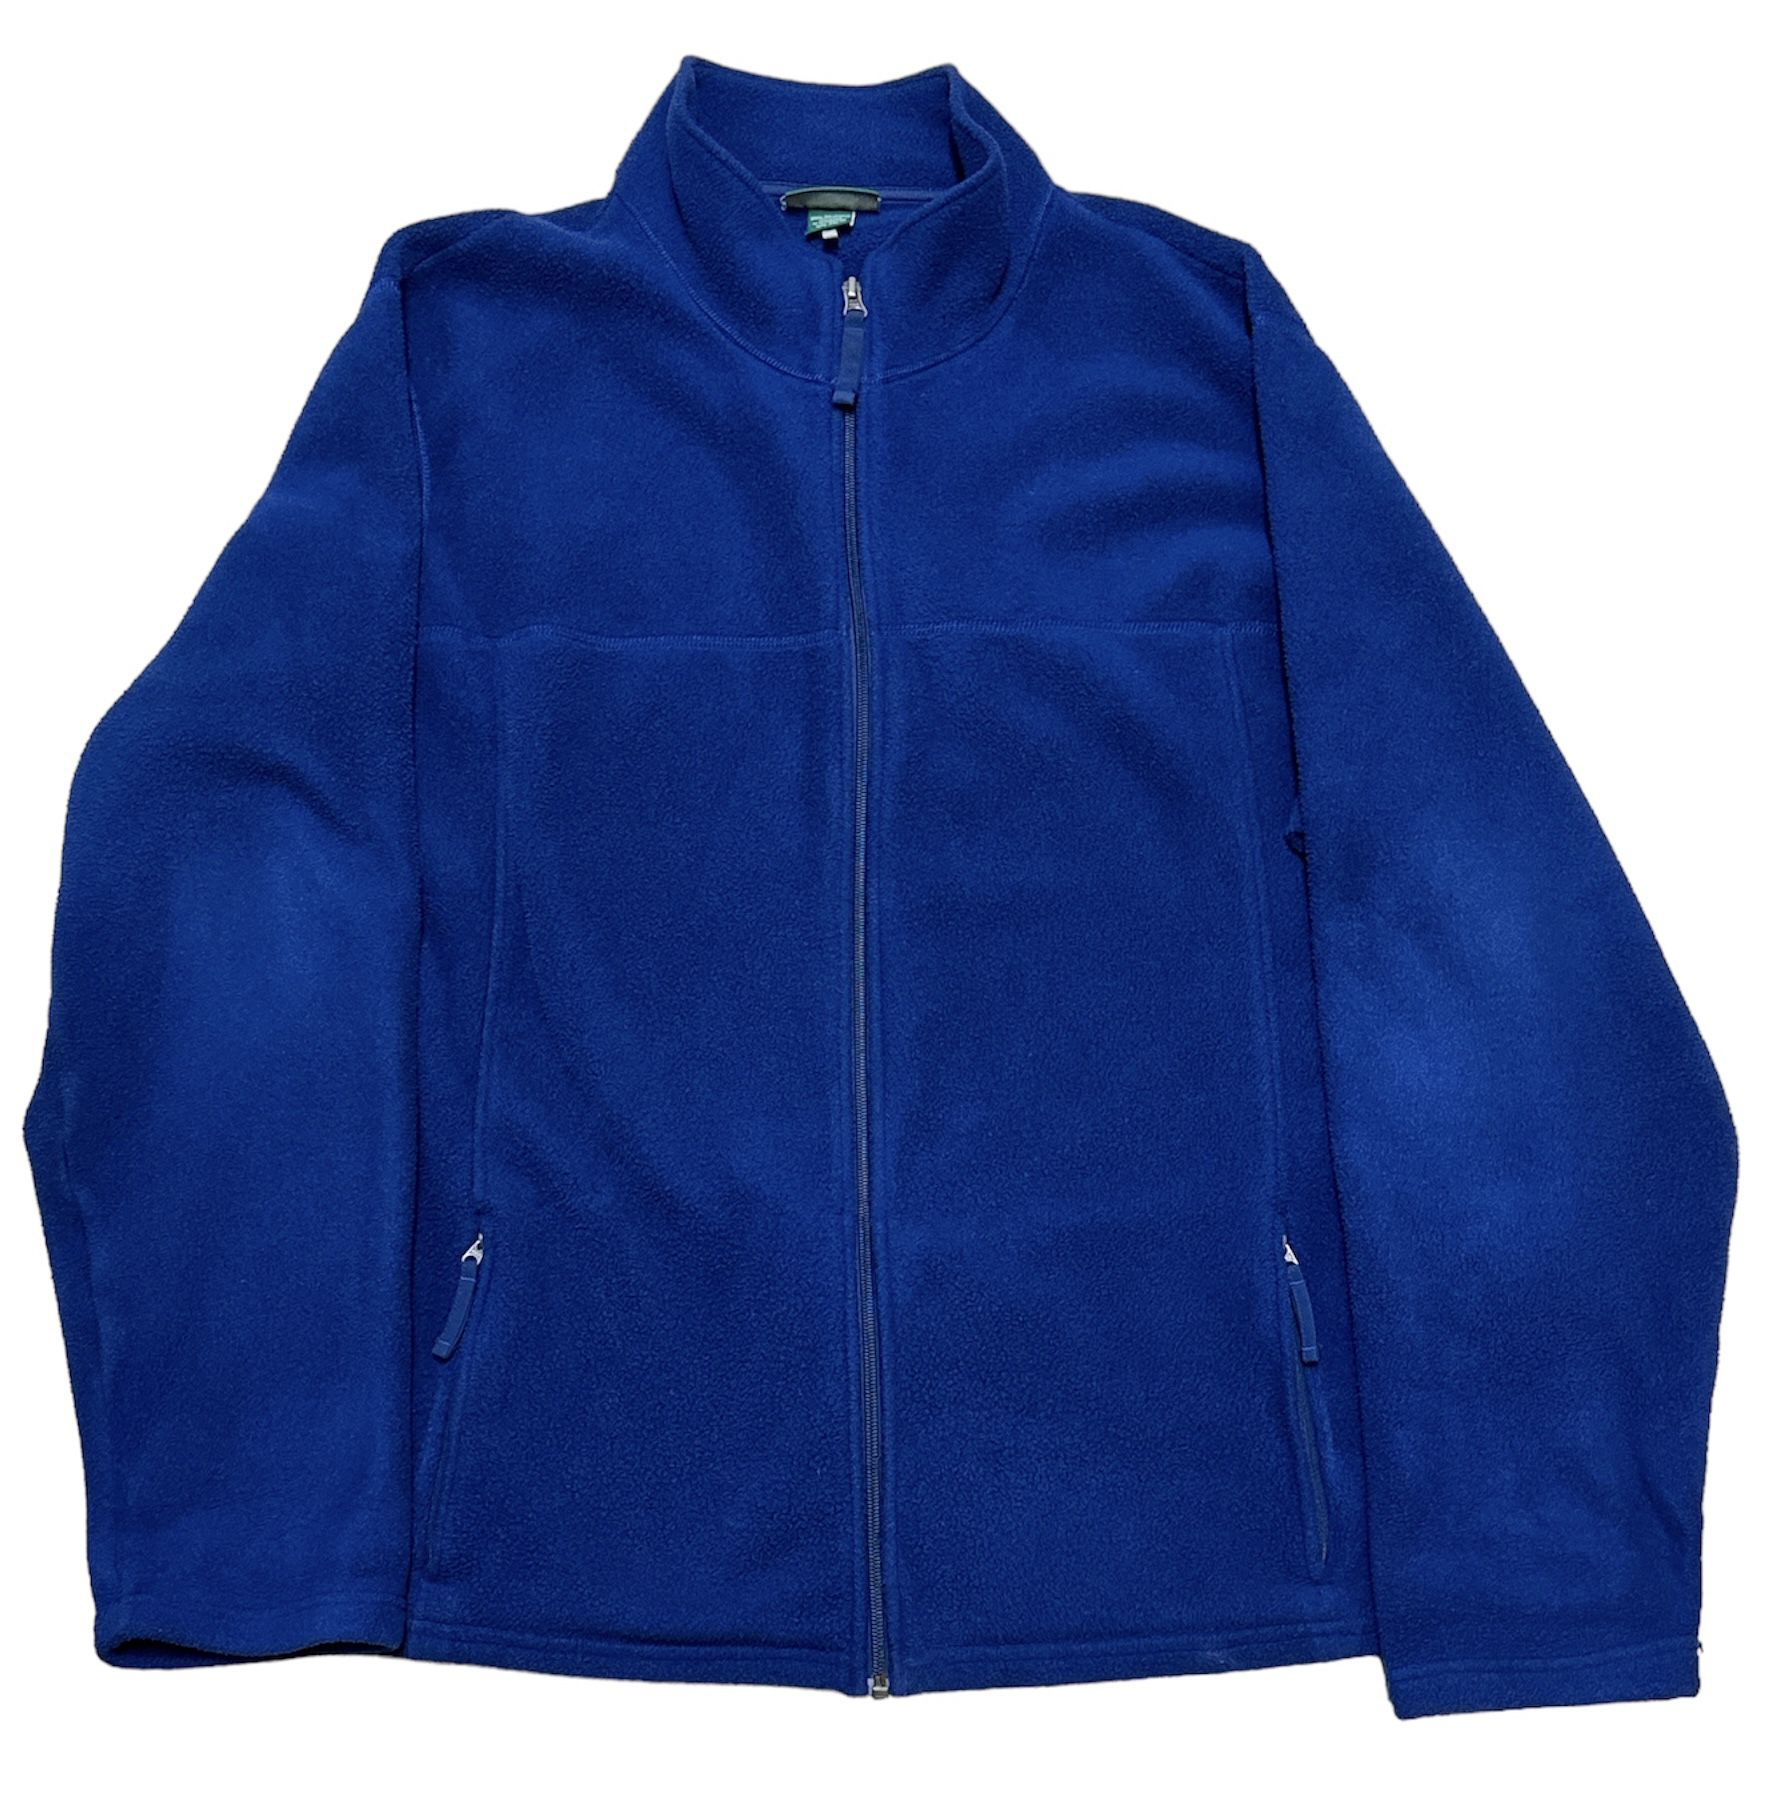 L.L. Bean Men’s Full Zip 100% Polyester Fleece Blue Sweater Jacket Size XXL-Tall